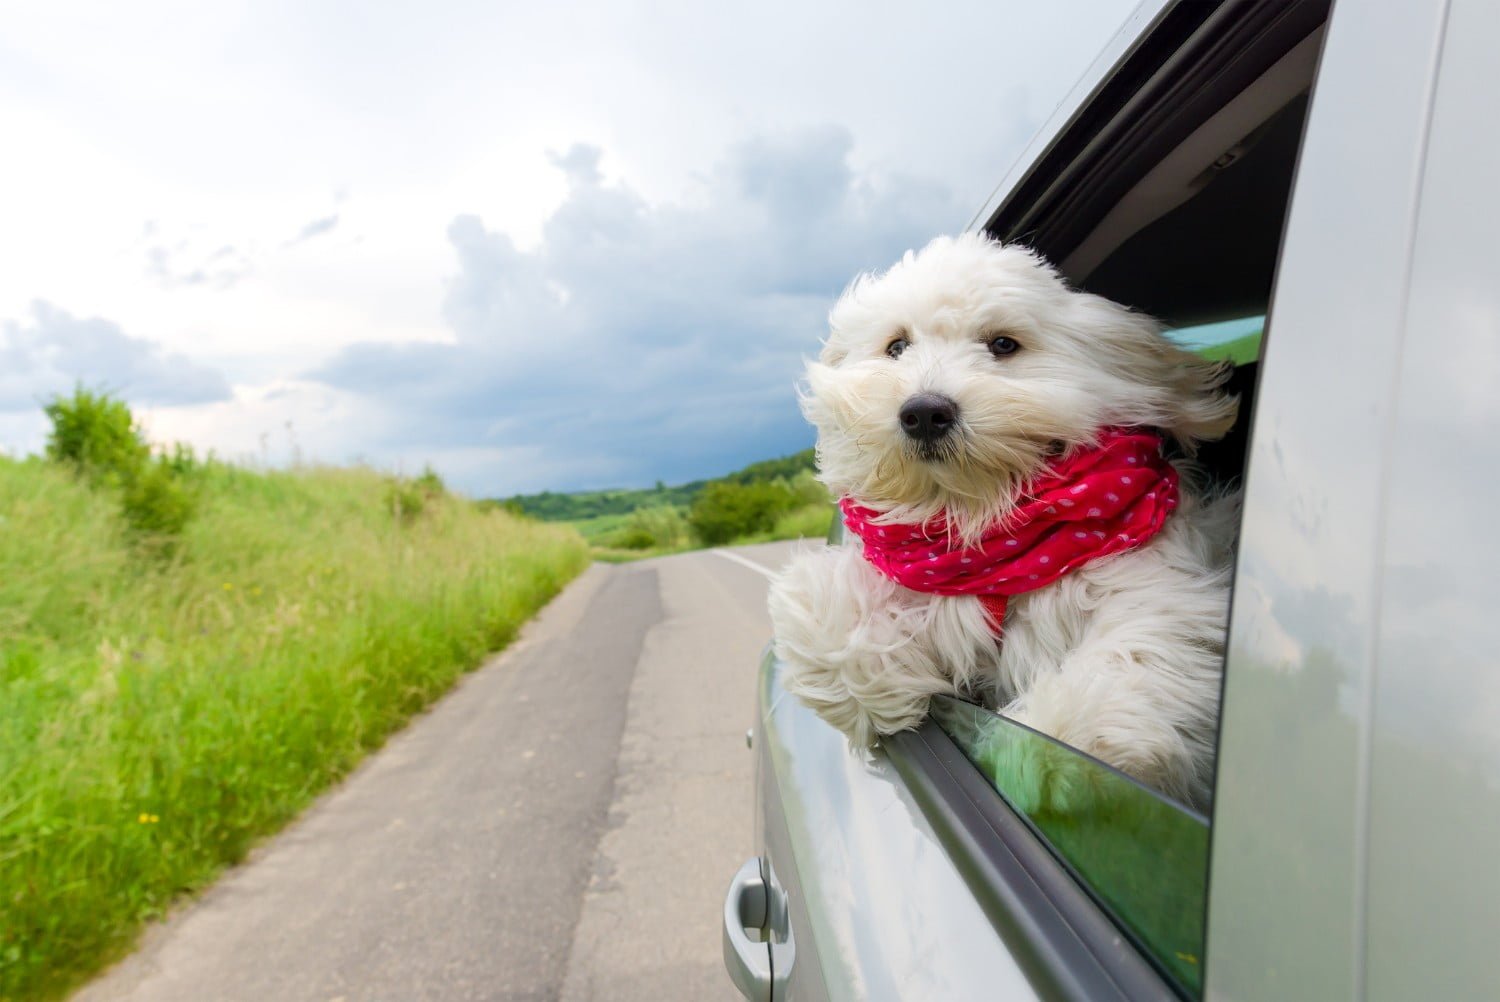 Dog enjoying a ride with the car